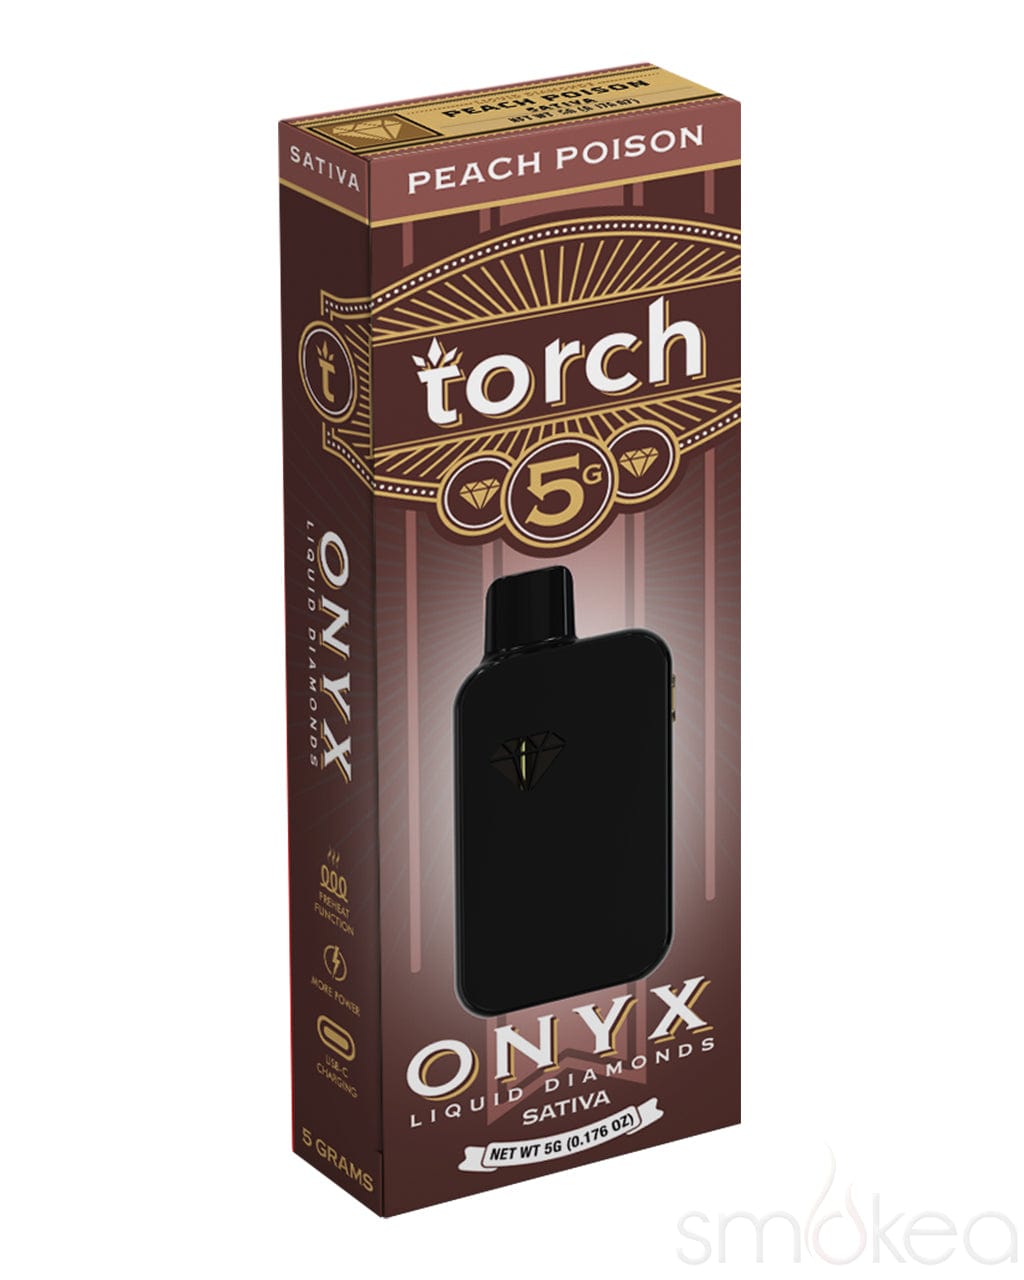 Torch 5g Onyx THCA Liquid Diamonds Vape - Peach Poison